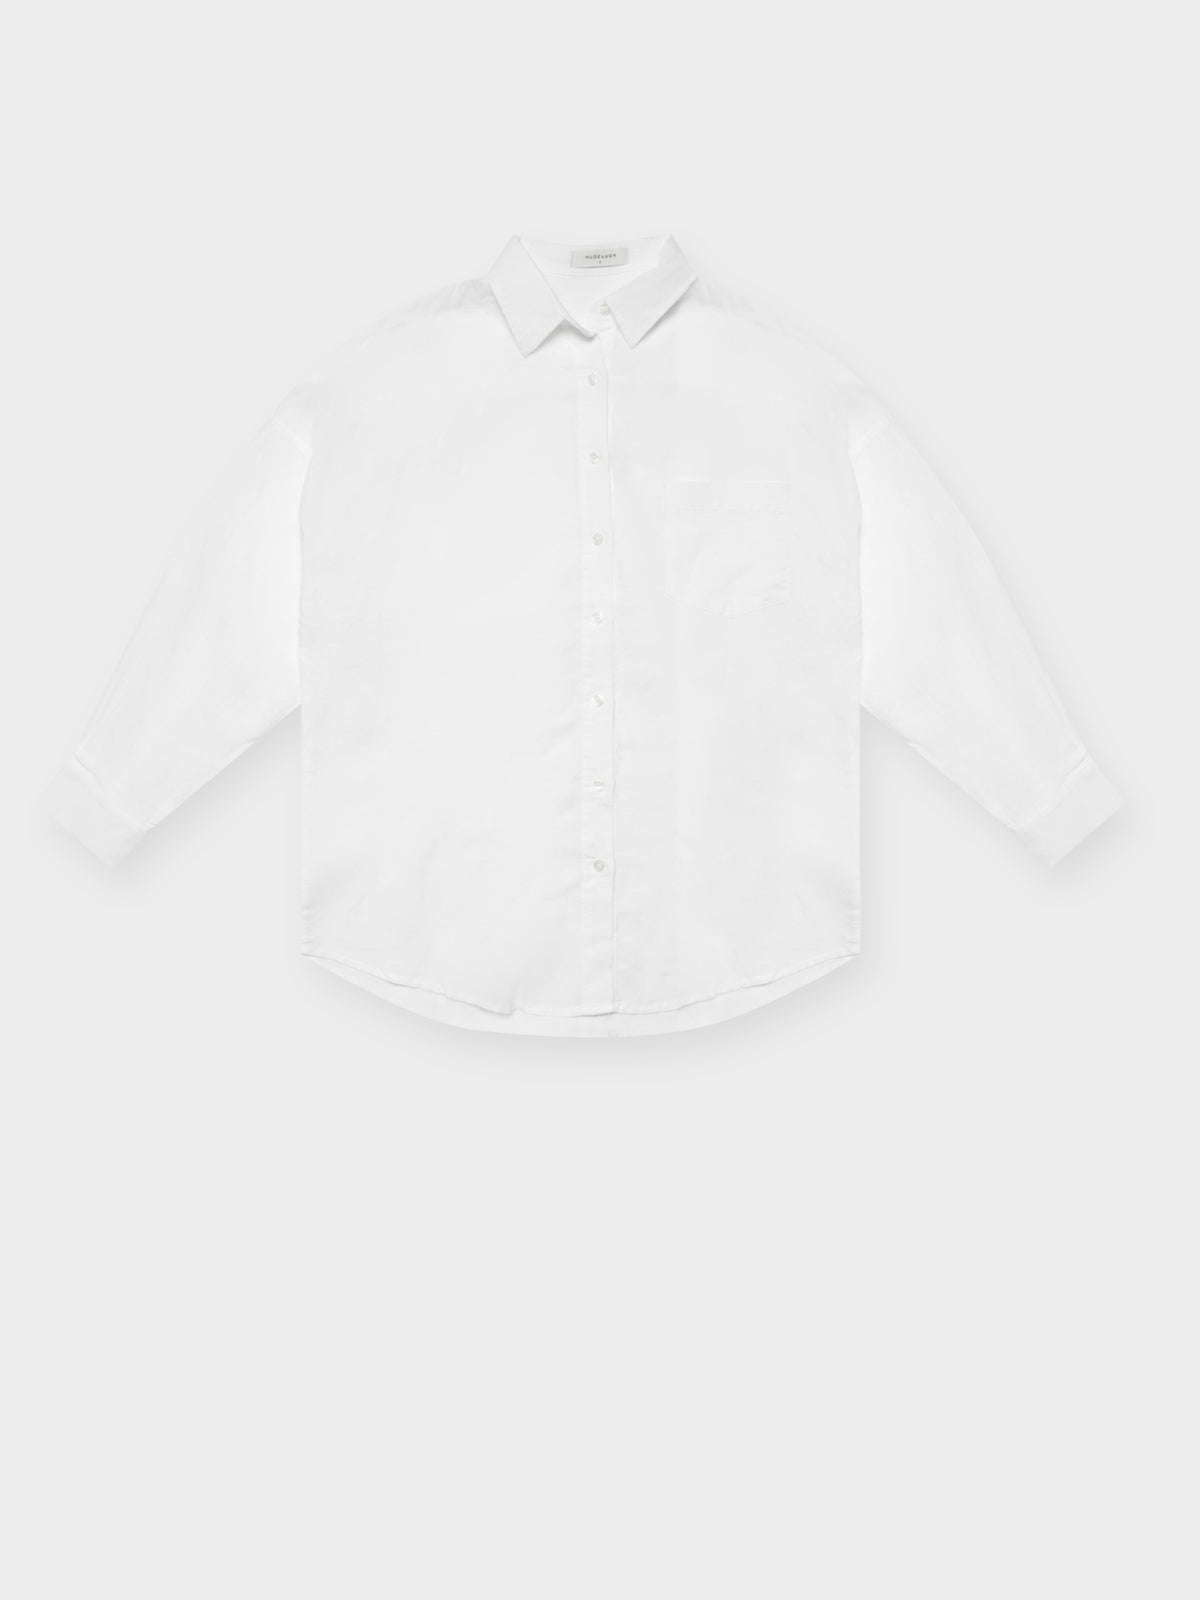 Leigh Linen Shirt in White